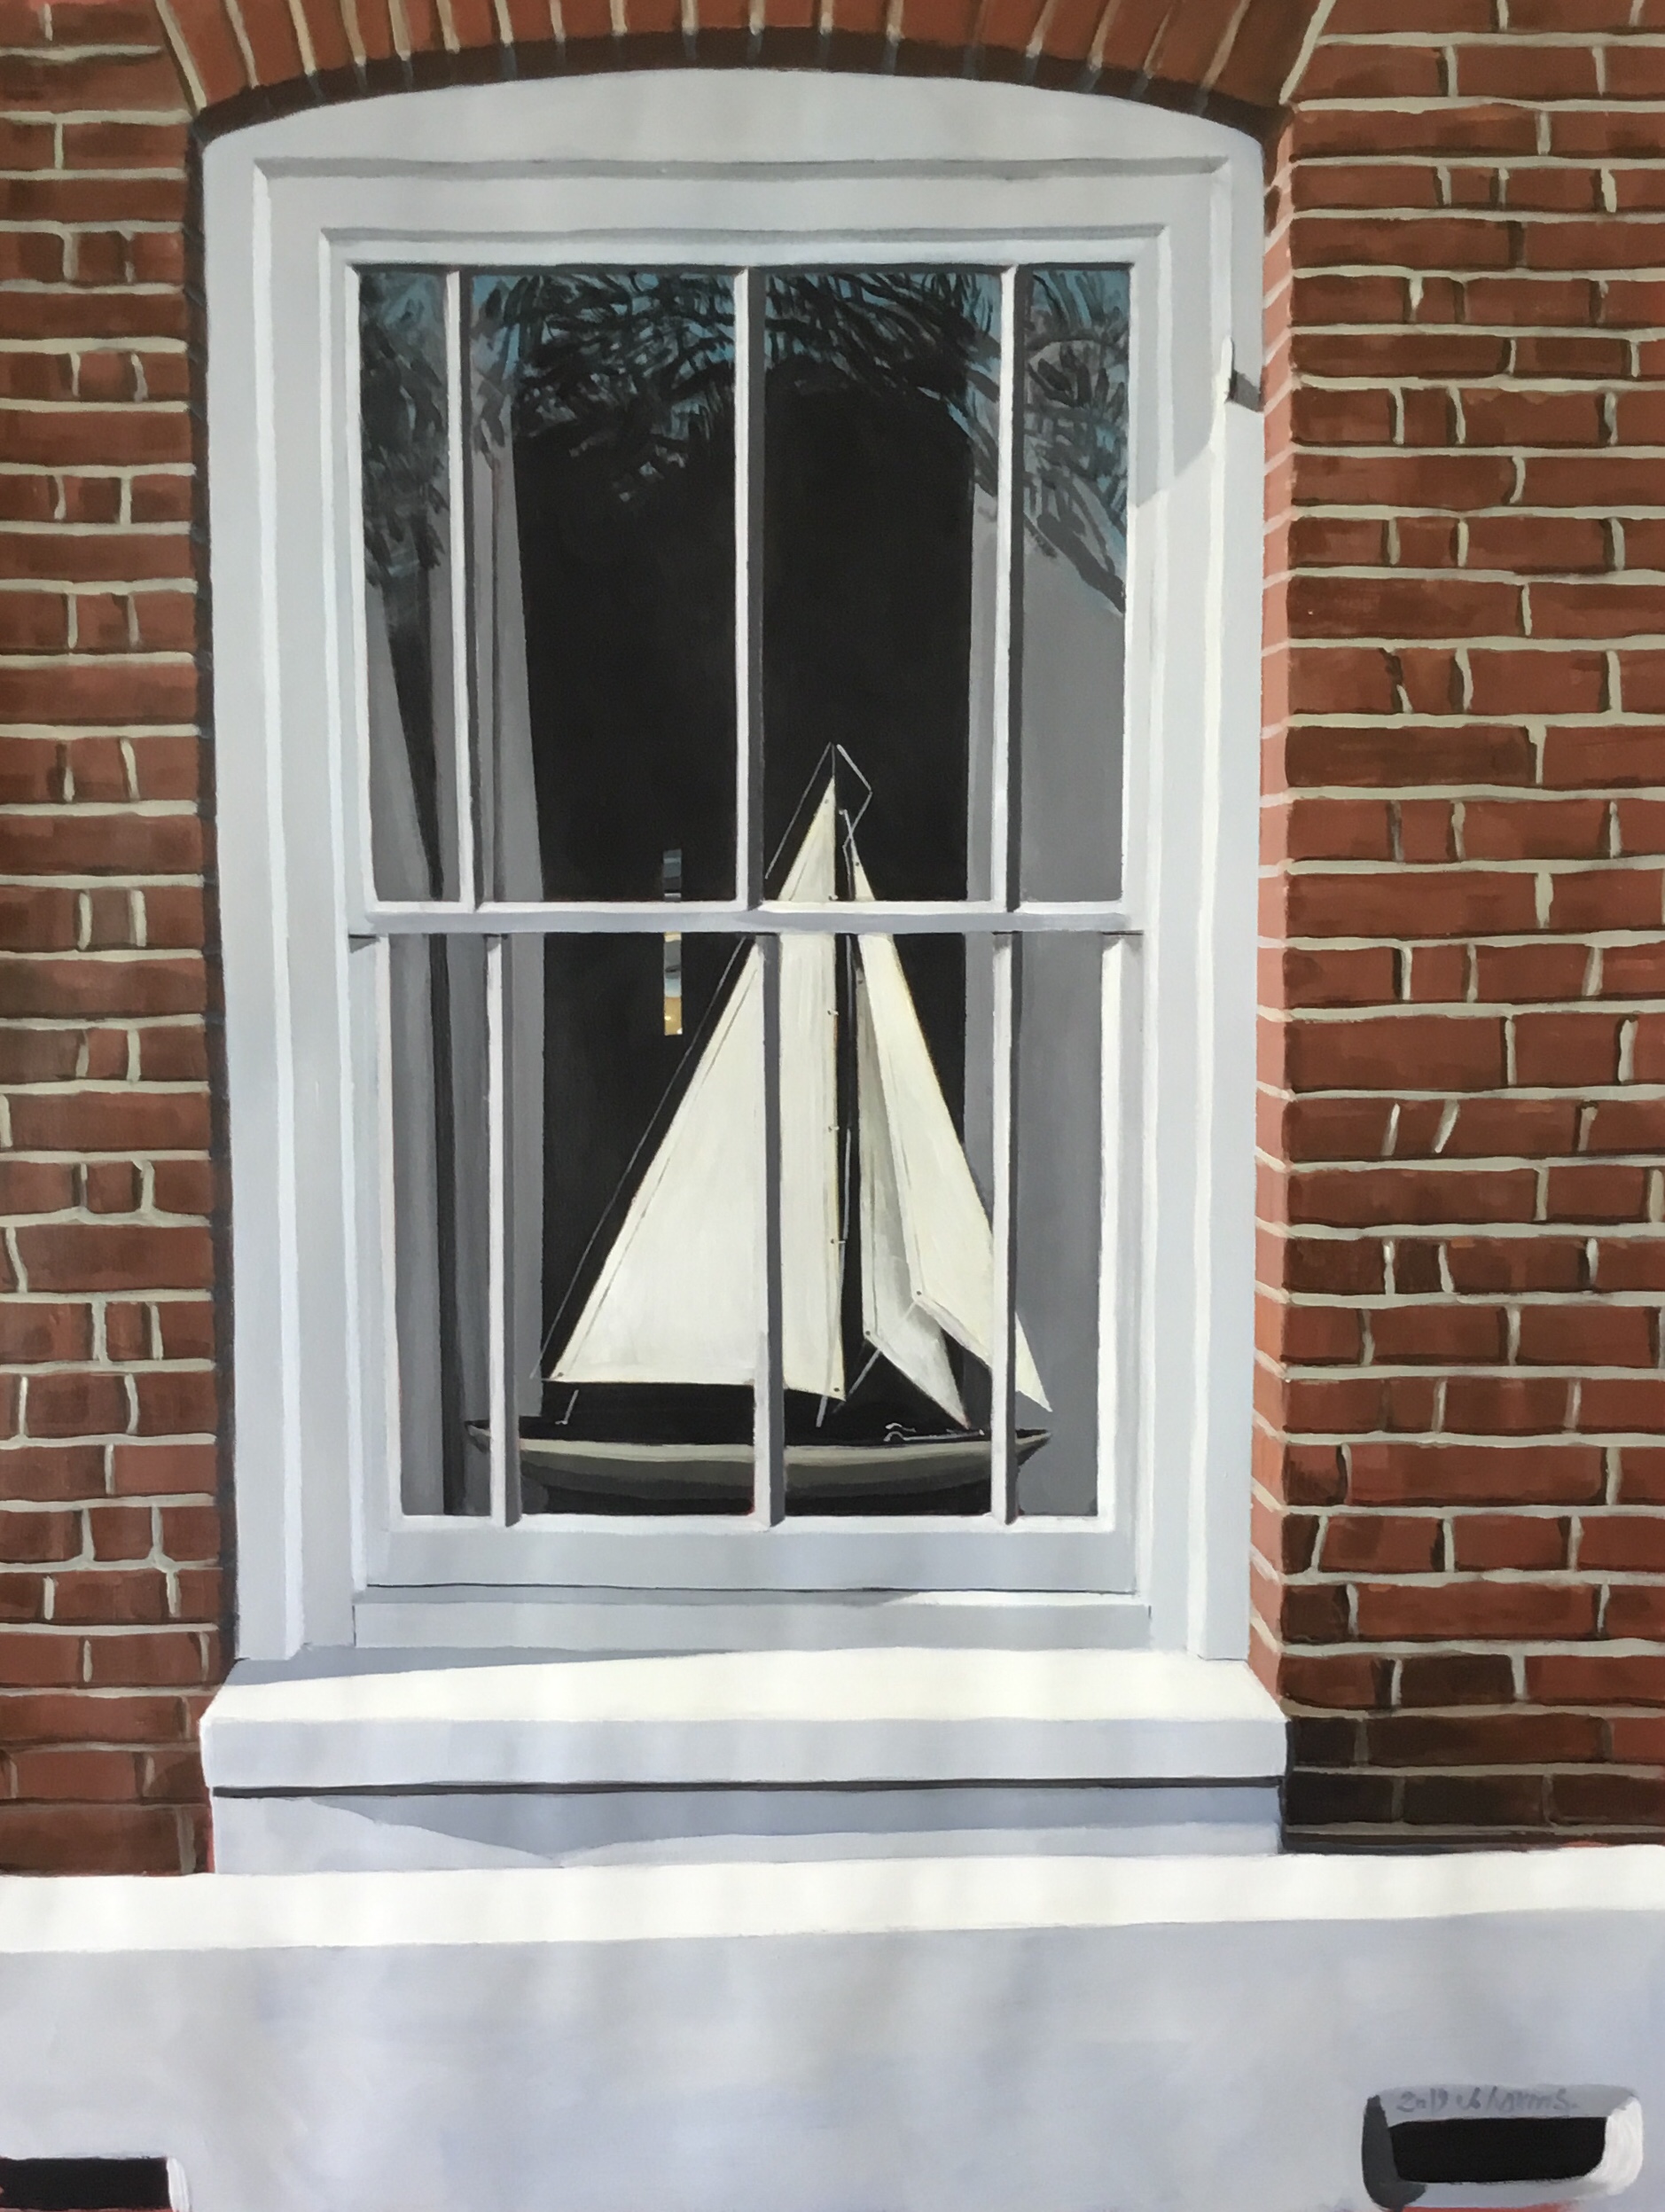 Boat behind the window. Windows of Rye. 2019